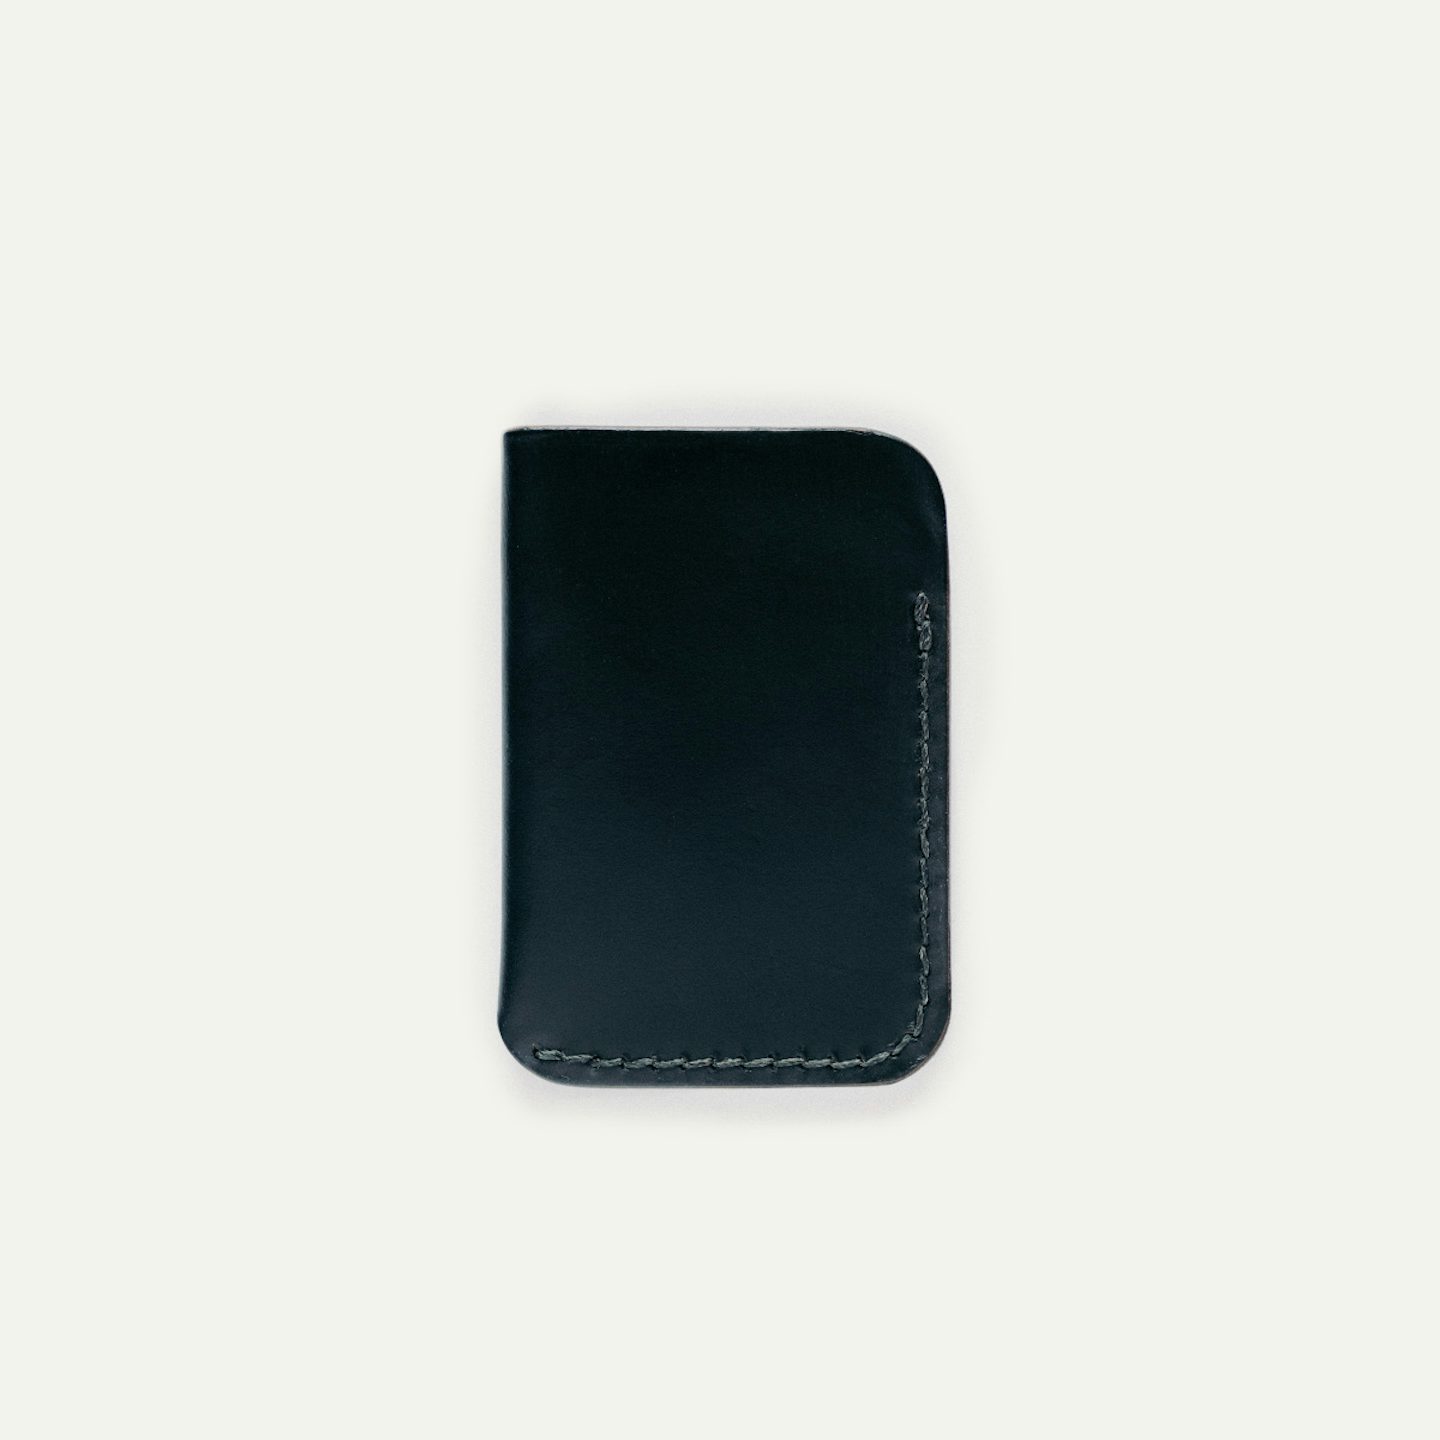 Card Wallet - Black, Horween